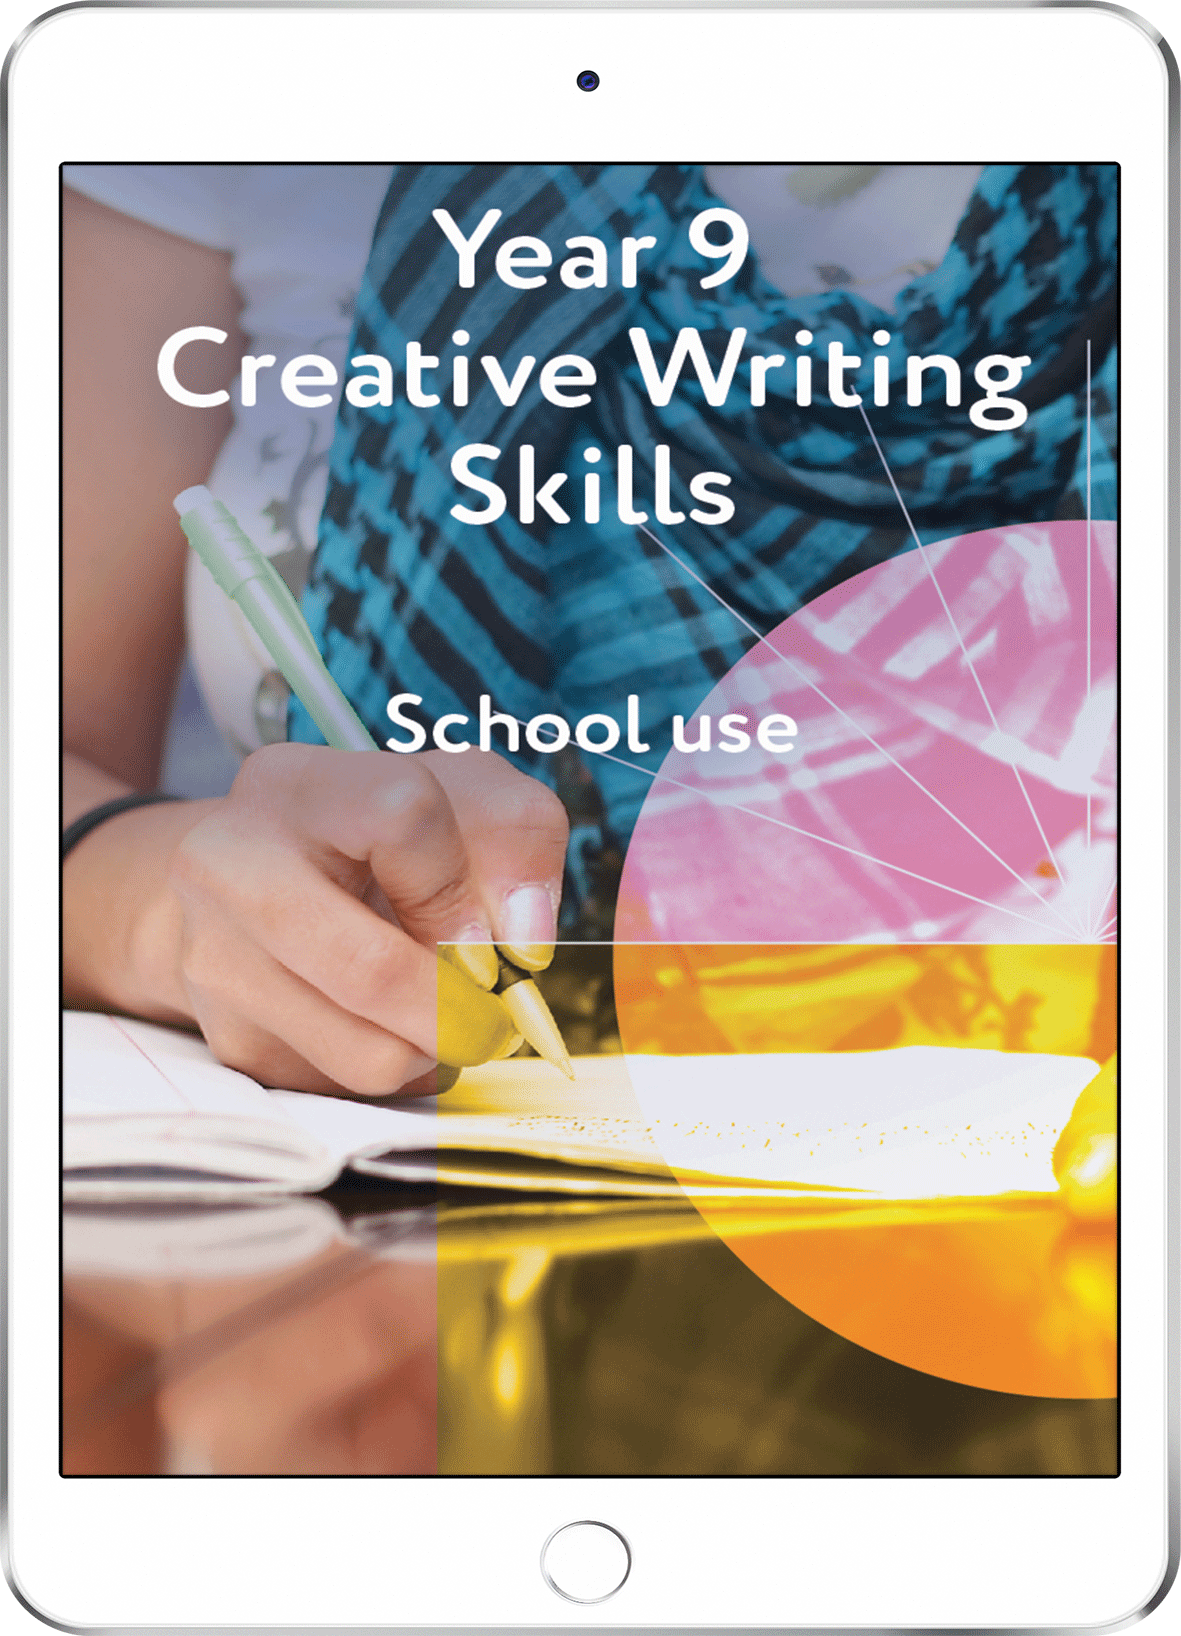 Year 9 Creative Writing Skills - School Use